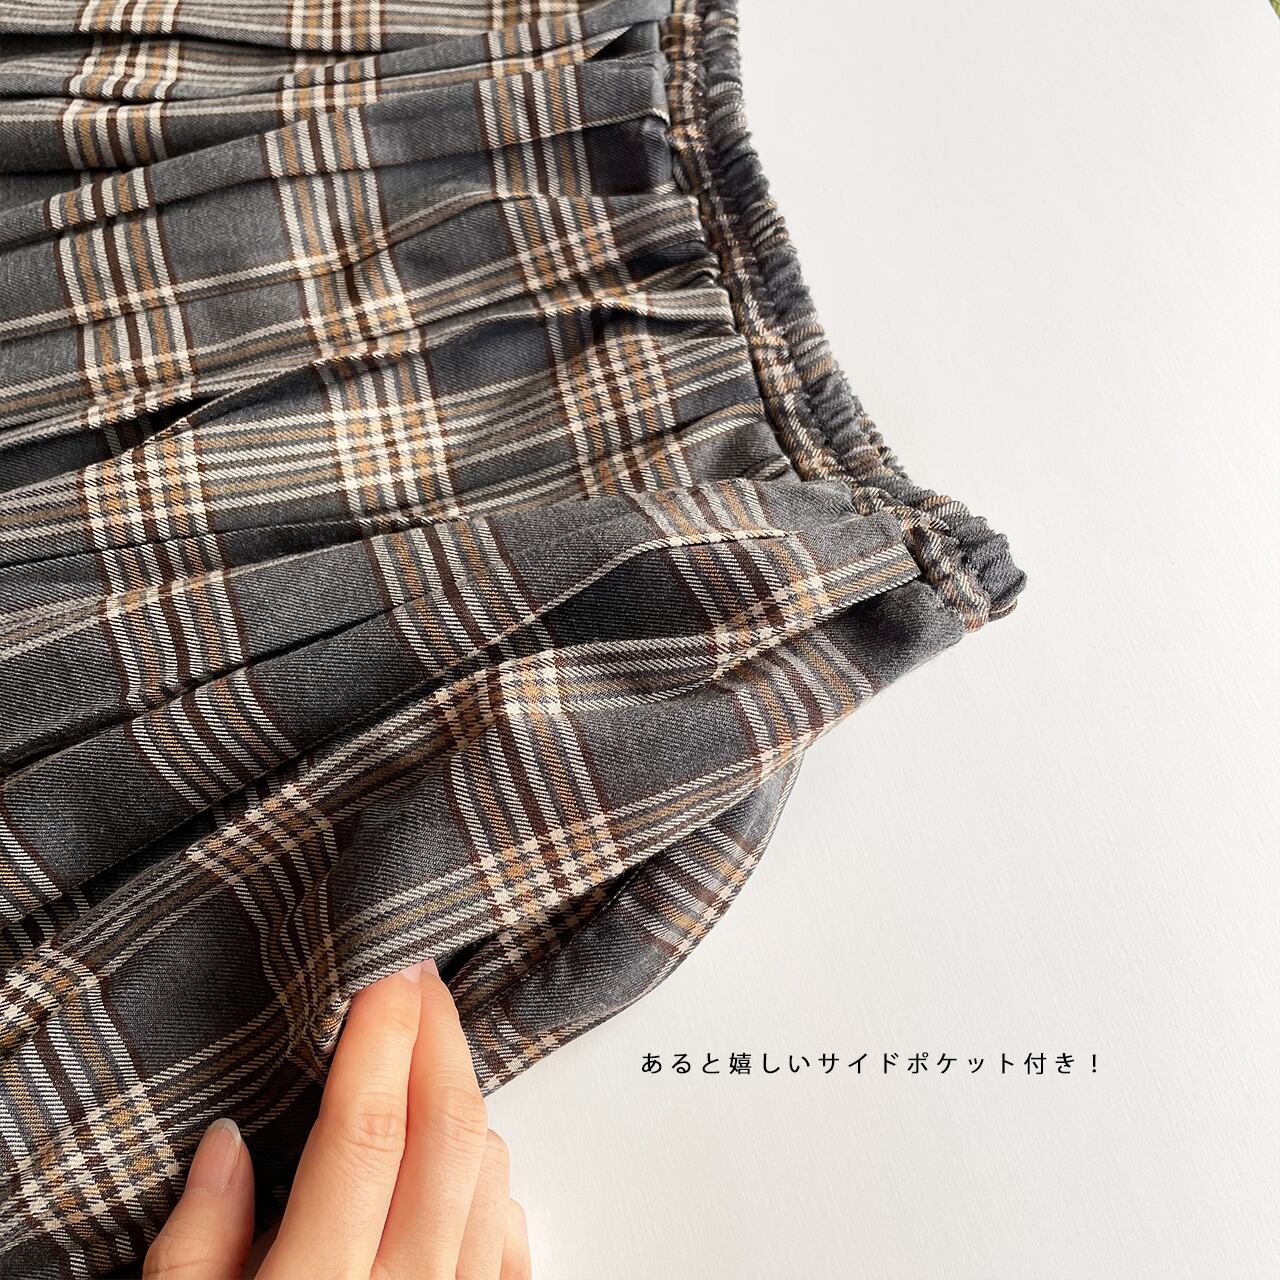 Check pleats skirt (gray)